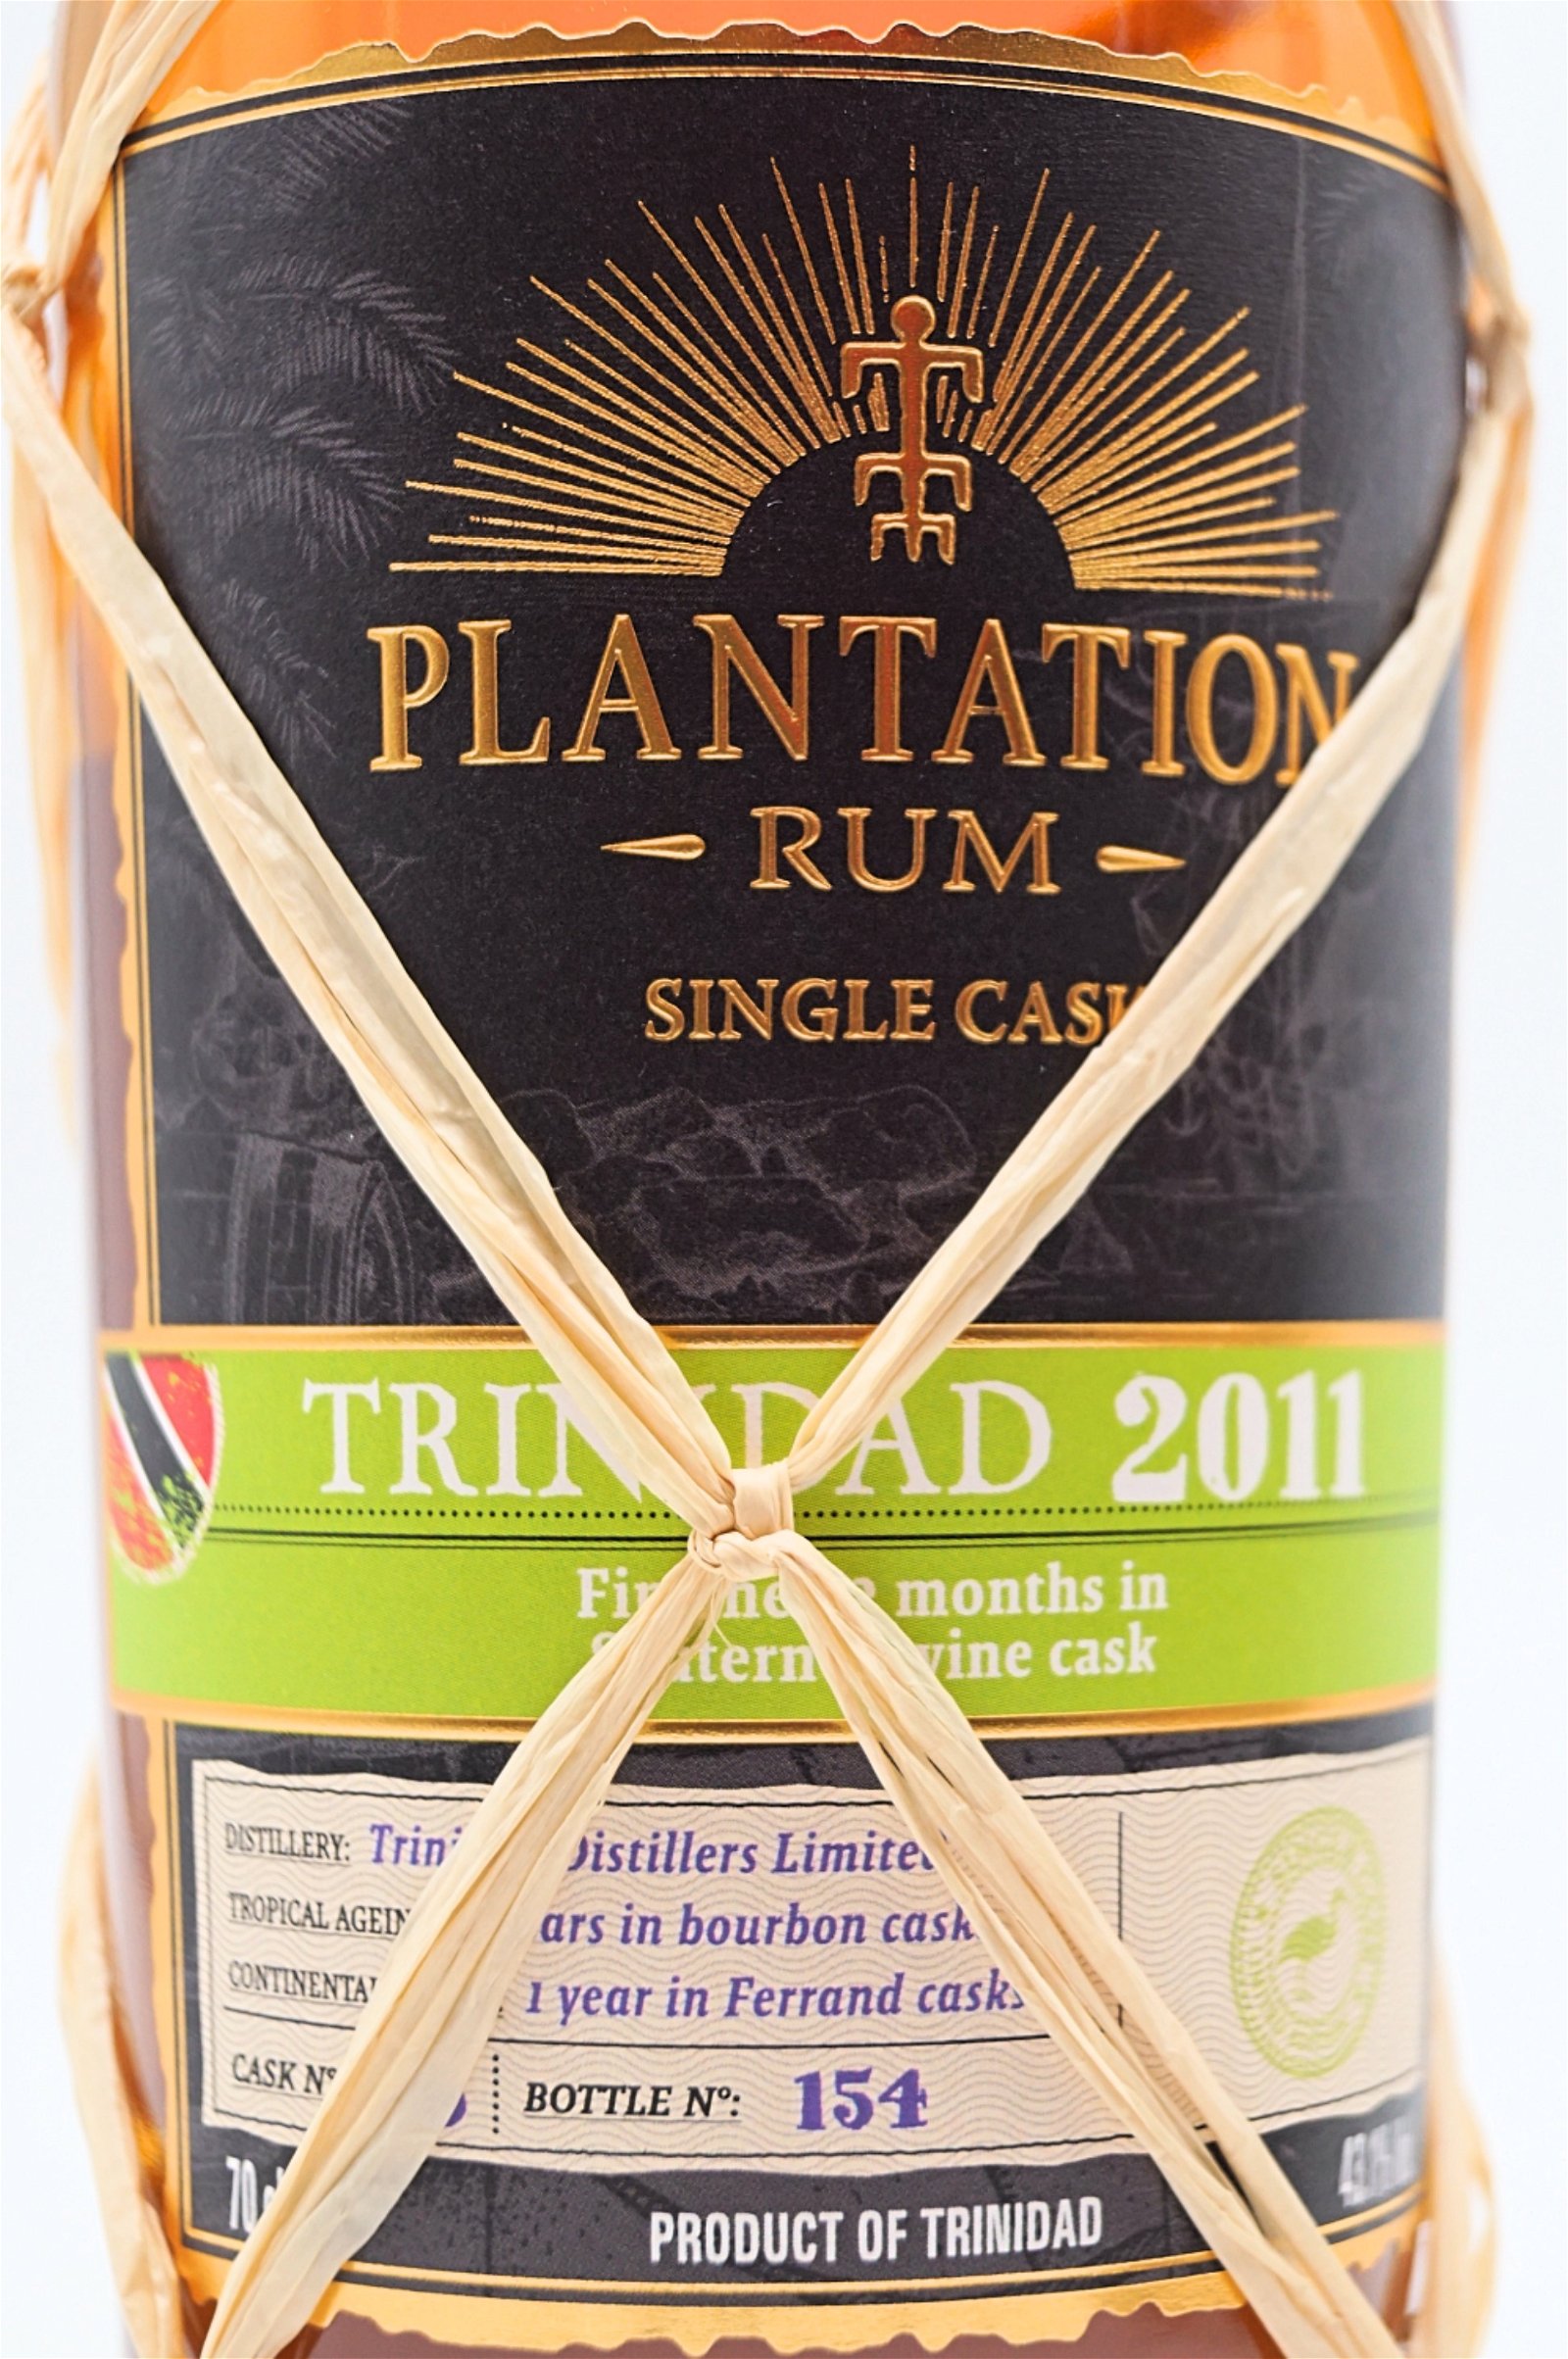 Plantation Rum Trinidad 2011 Sauternes Wine Cask Finish